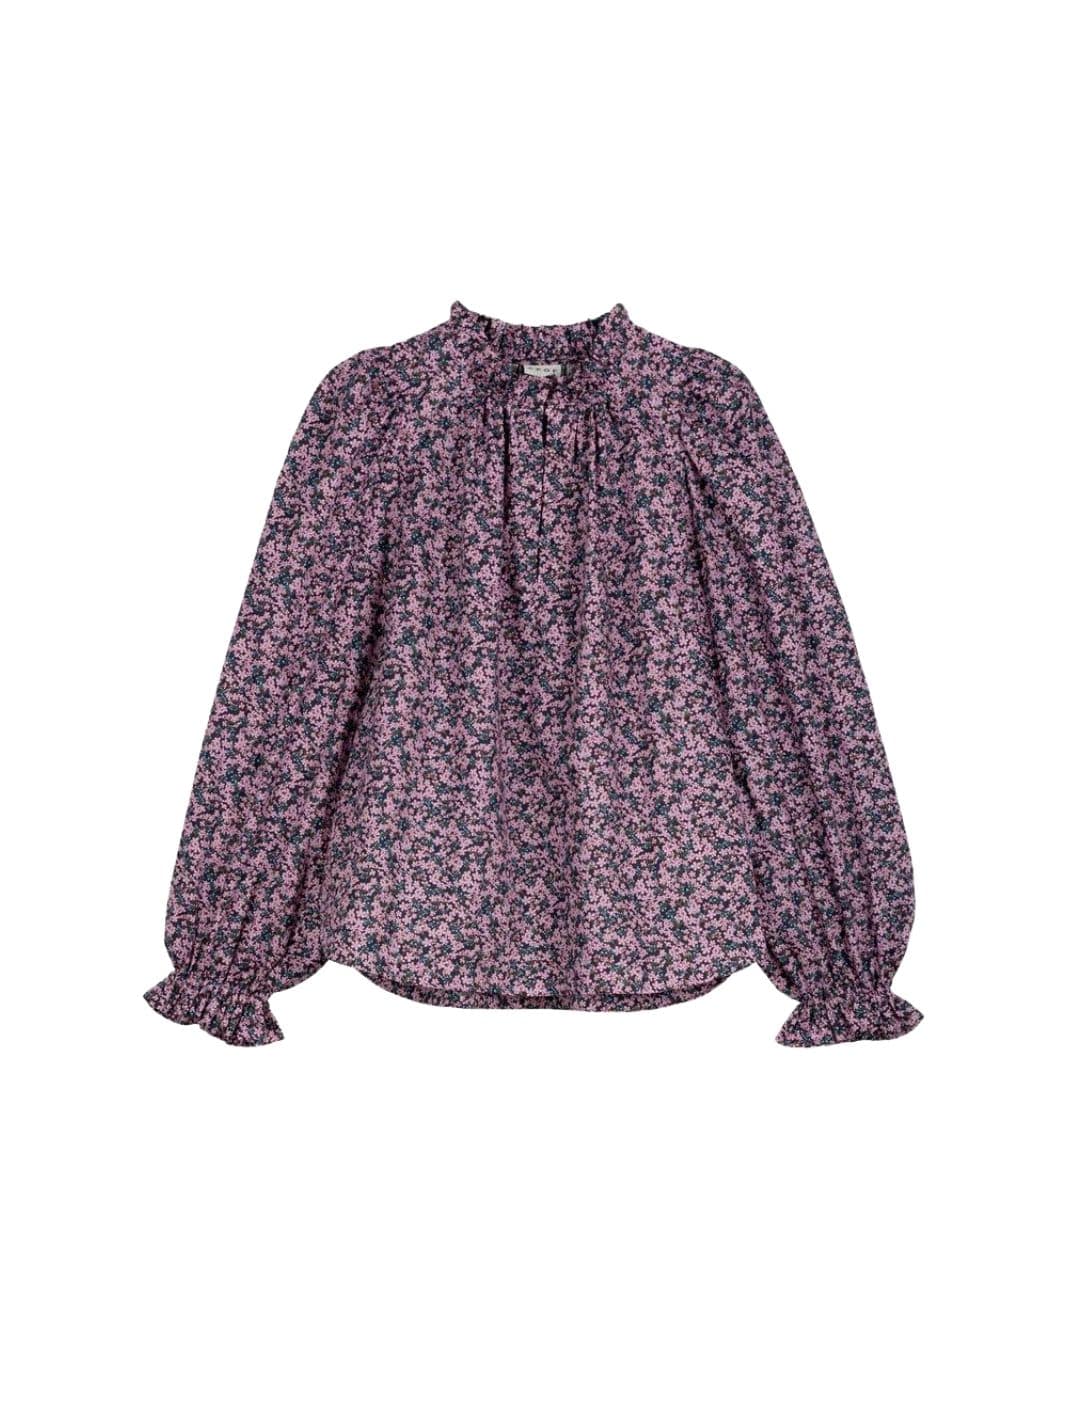 Apof Shirts Skjorte | Annabella Shirt Star Anise Violette